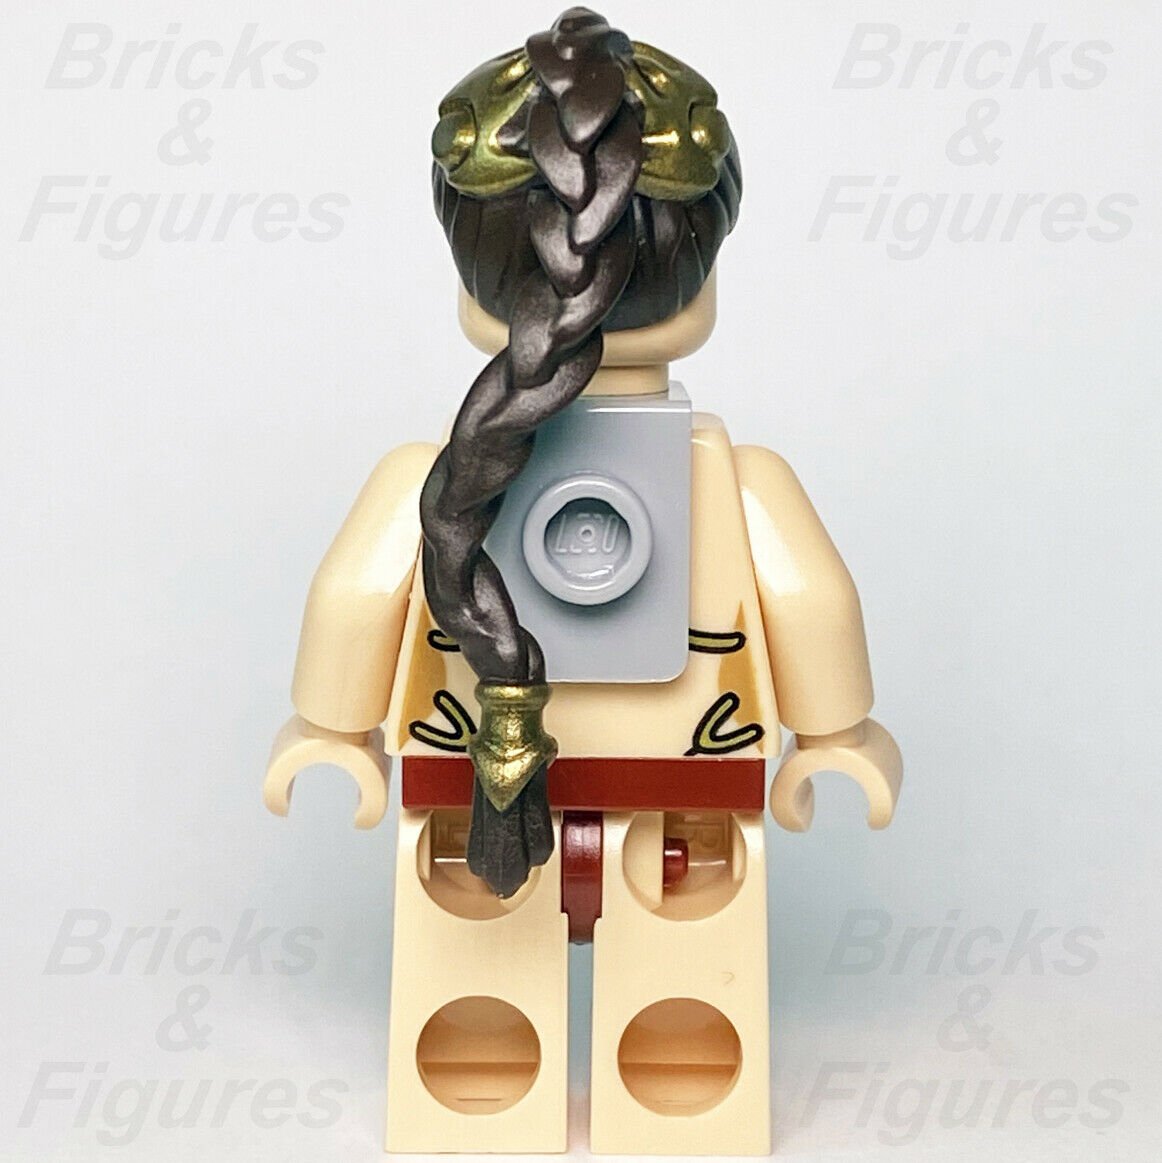 Star Wars LEGO Princess Leia Slave Outfit Return of the Jedi Minifigure 75020 - Bricks & Figures